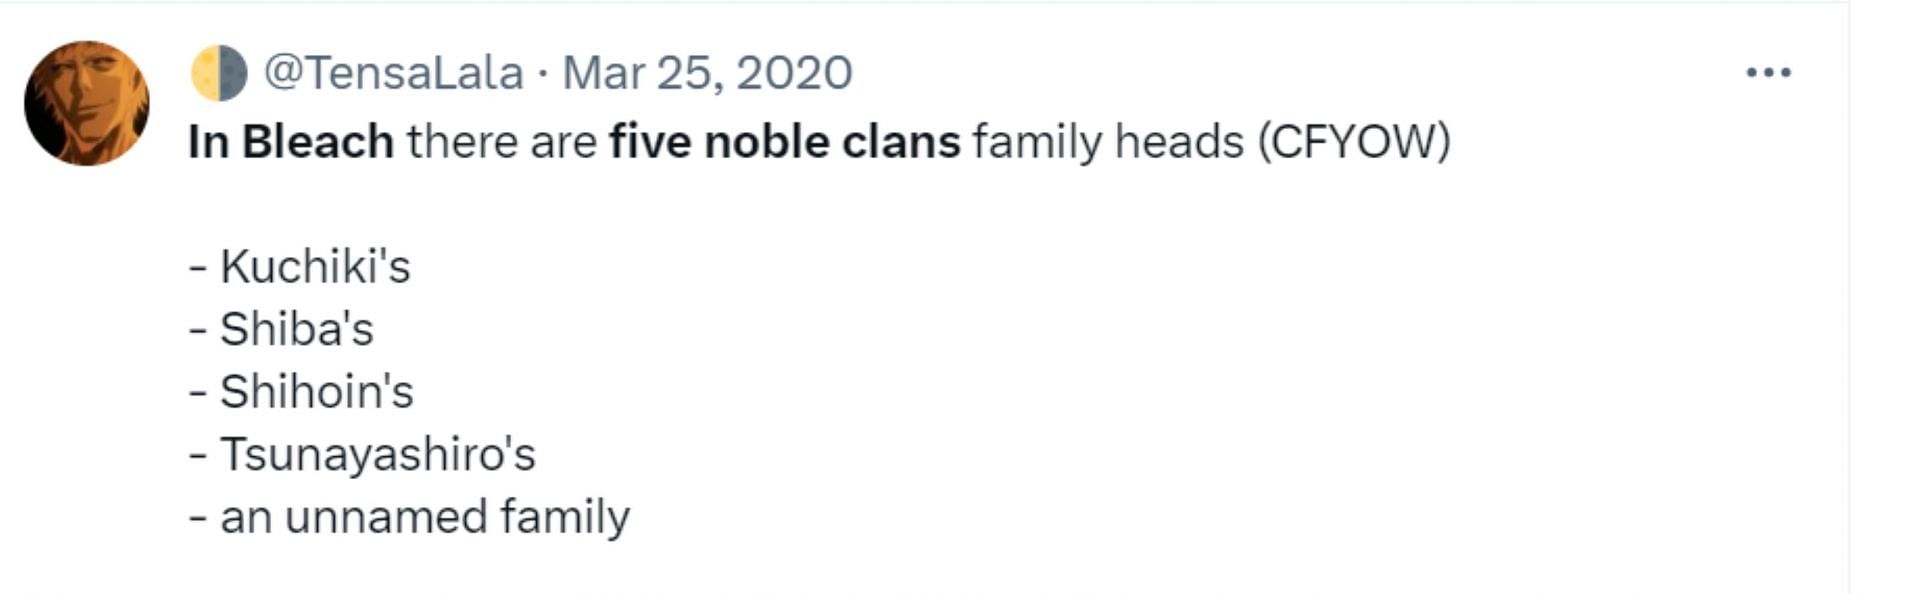 Comment on five noble clans (Image via Twitter)